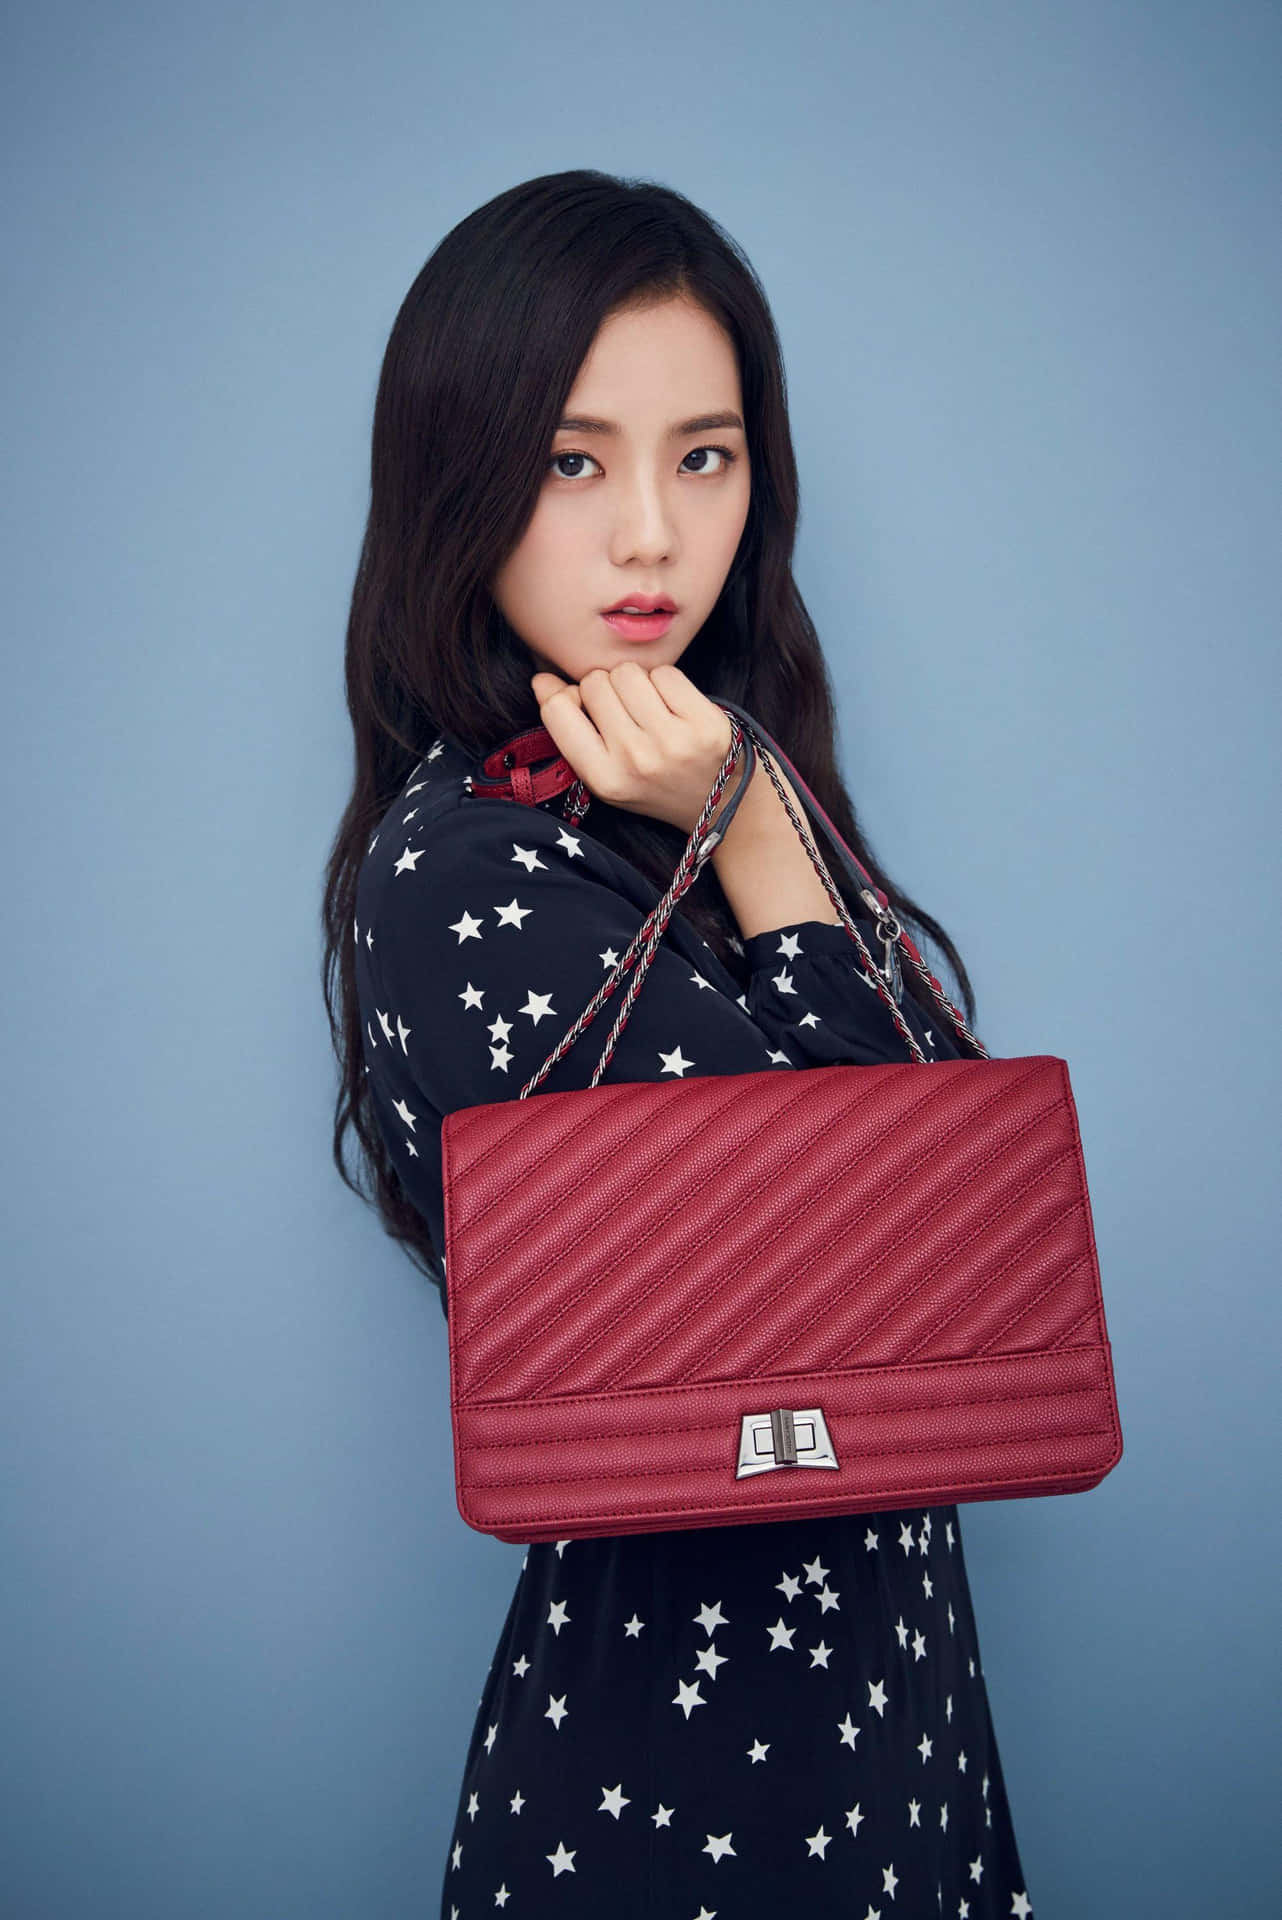 Jisoo Blackpink Red Bag Model Background